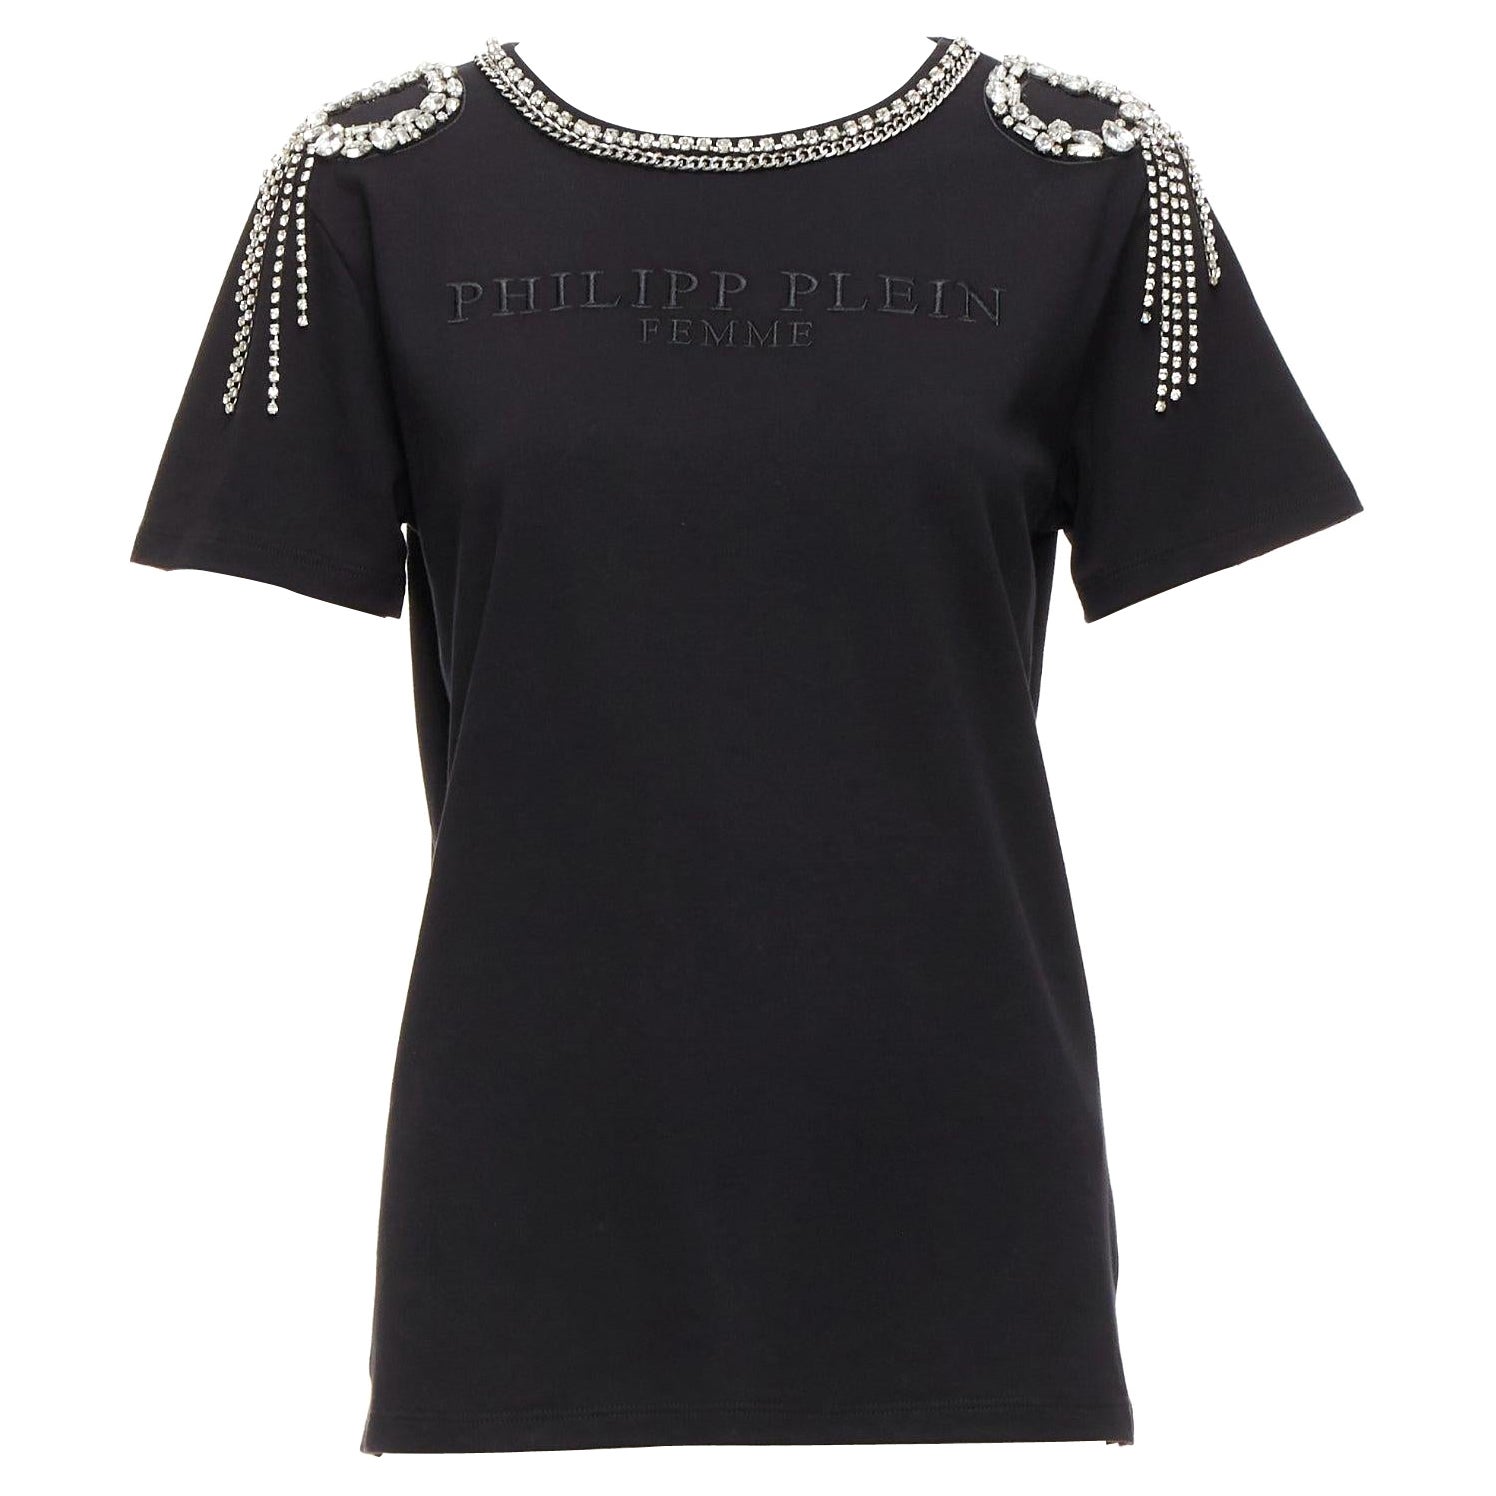 PHILLIP PLEIN FEMME black embroidery clear crystal fringe embellished tshirt XS For Sale